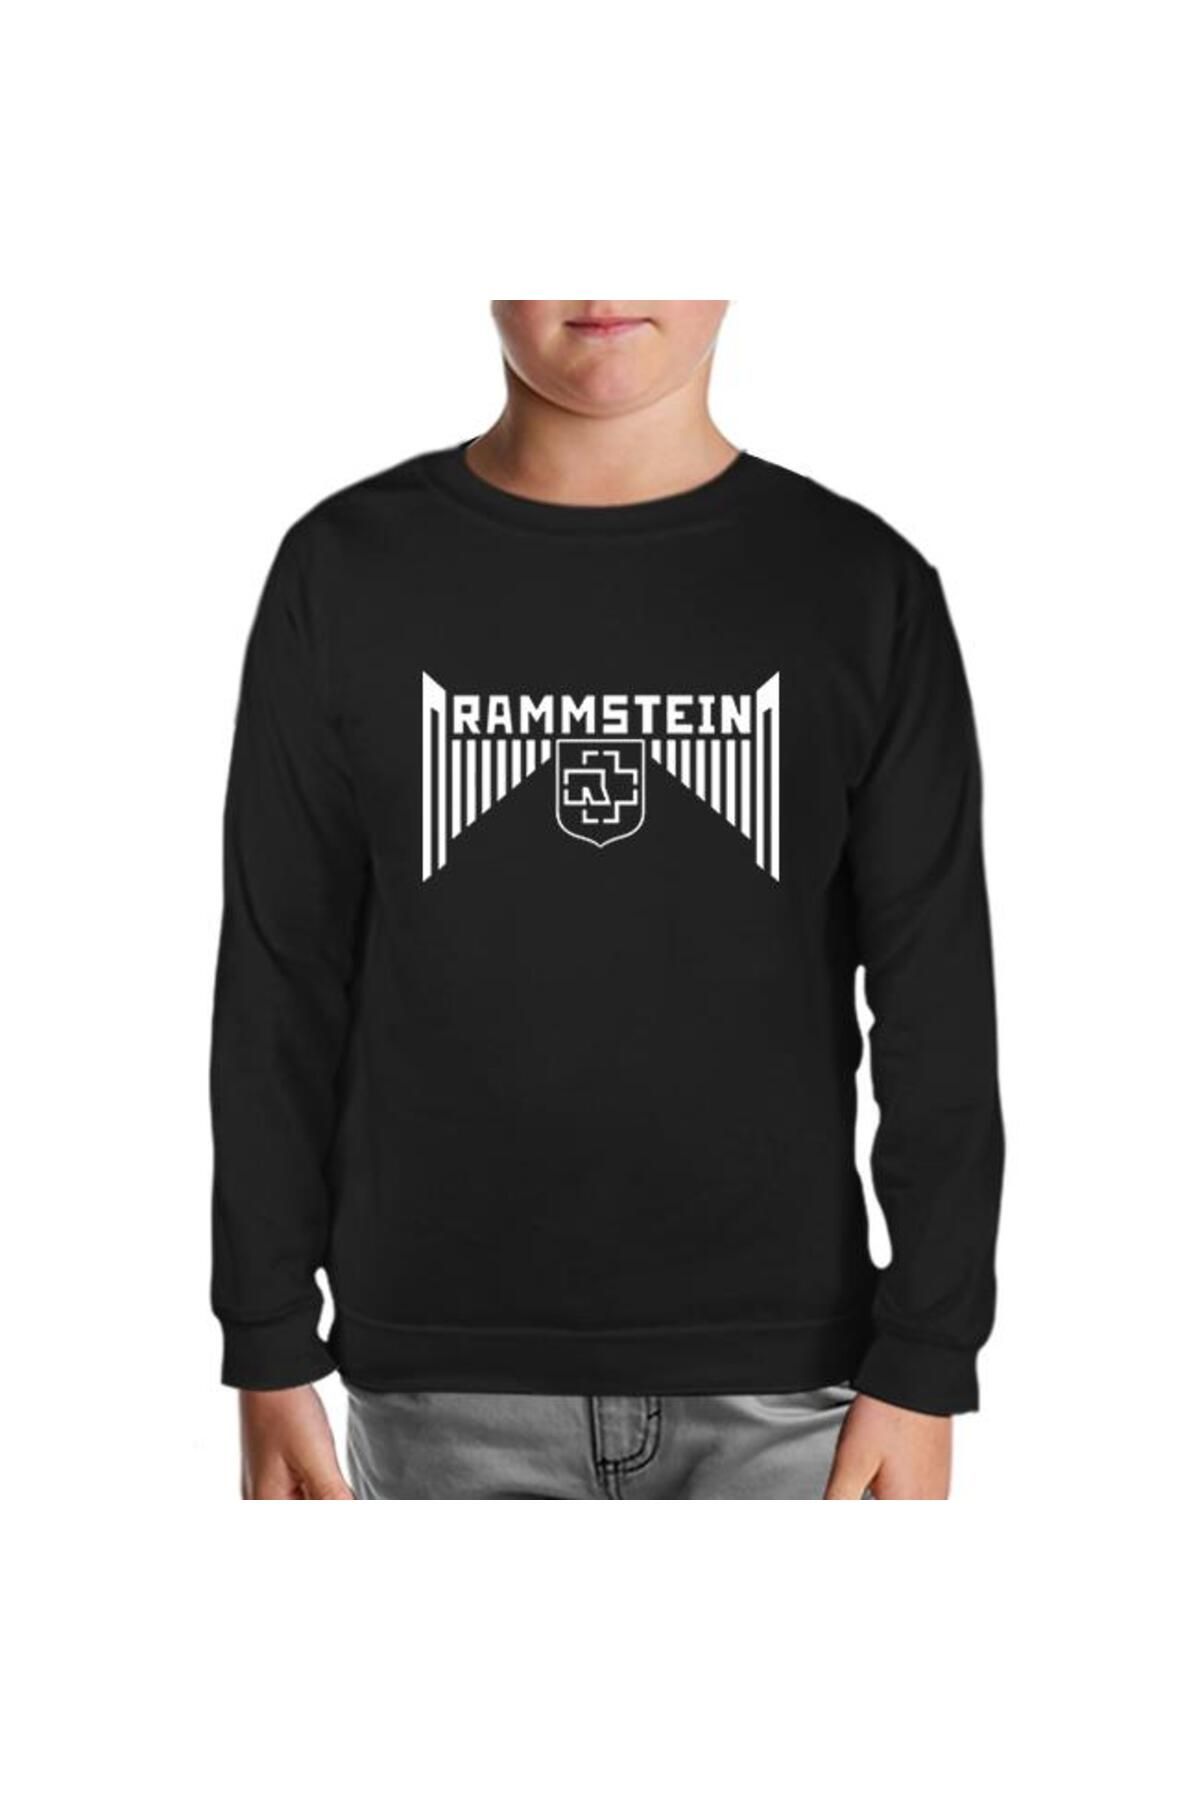 Lord T-Shirt Rammstein - Infinity Siyah Çocuk Sweatshirt